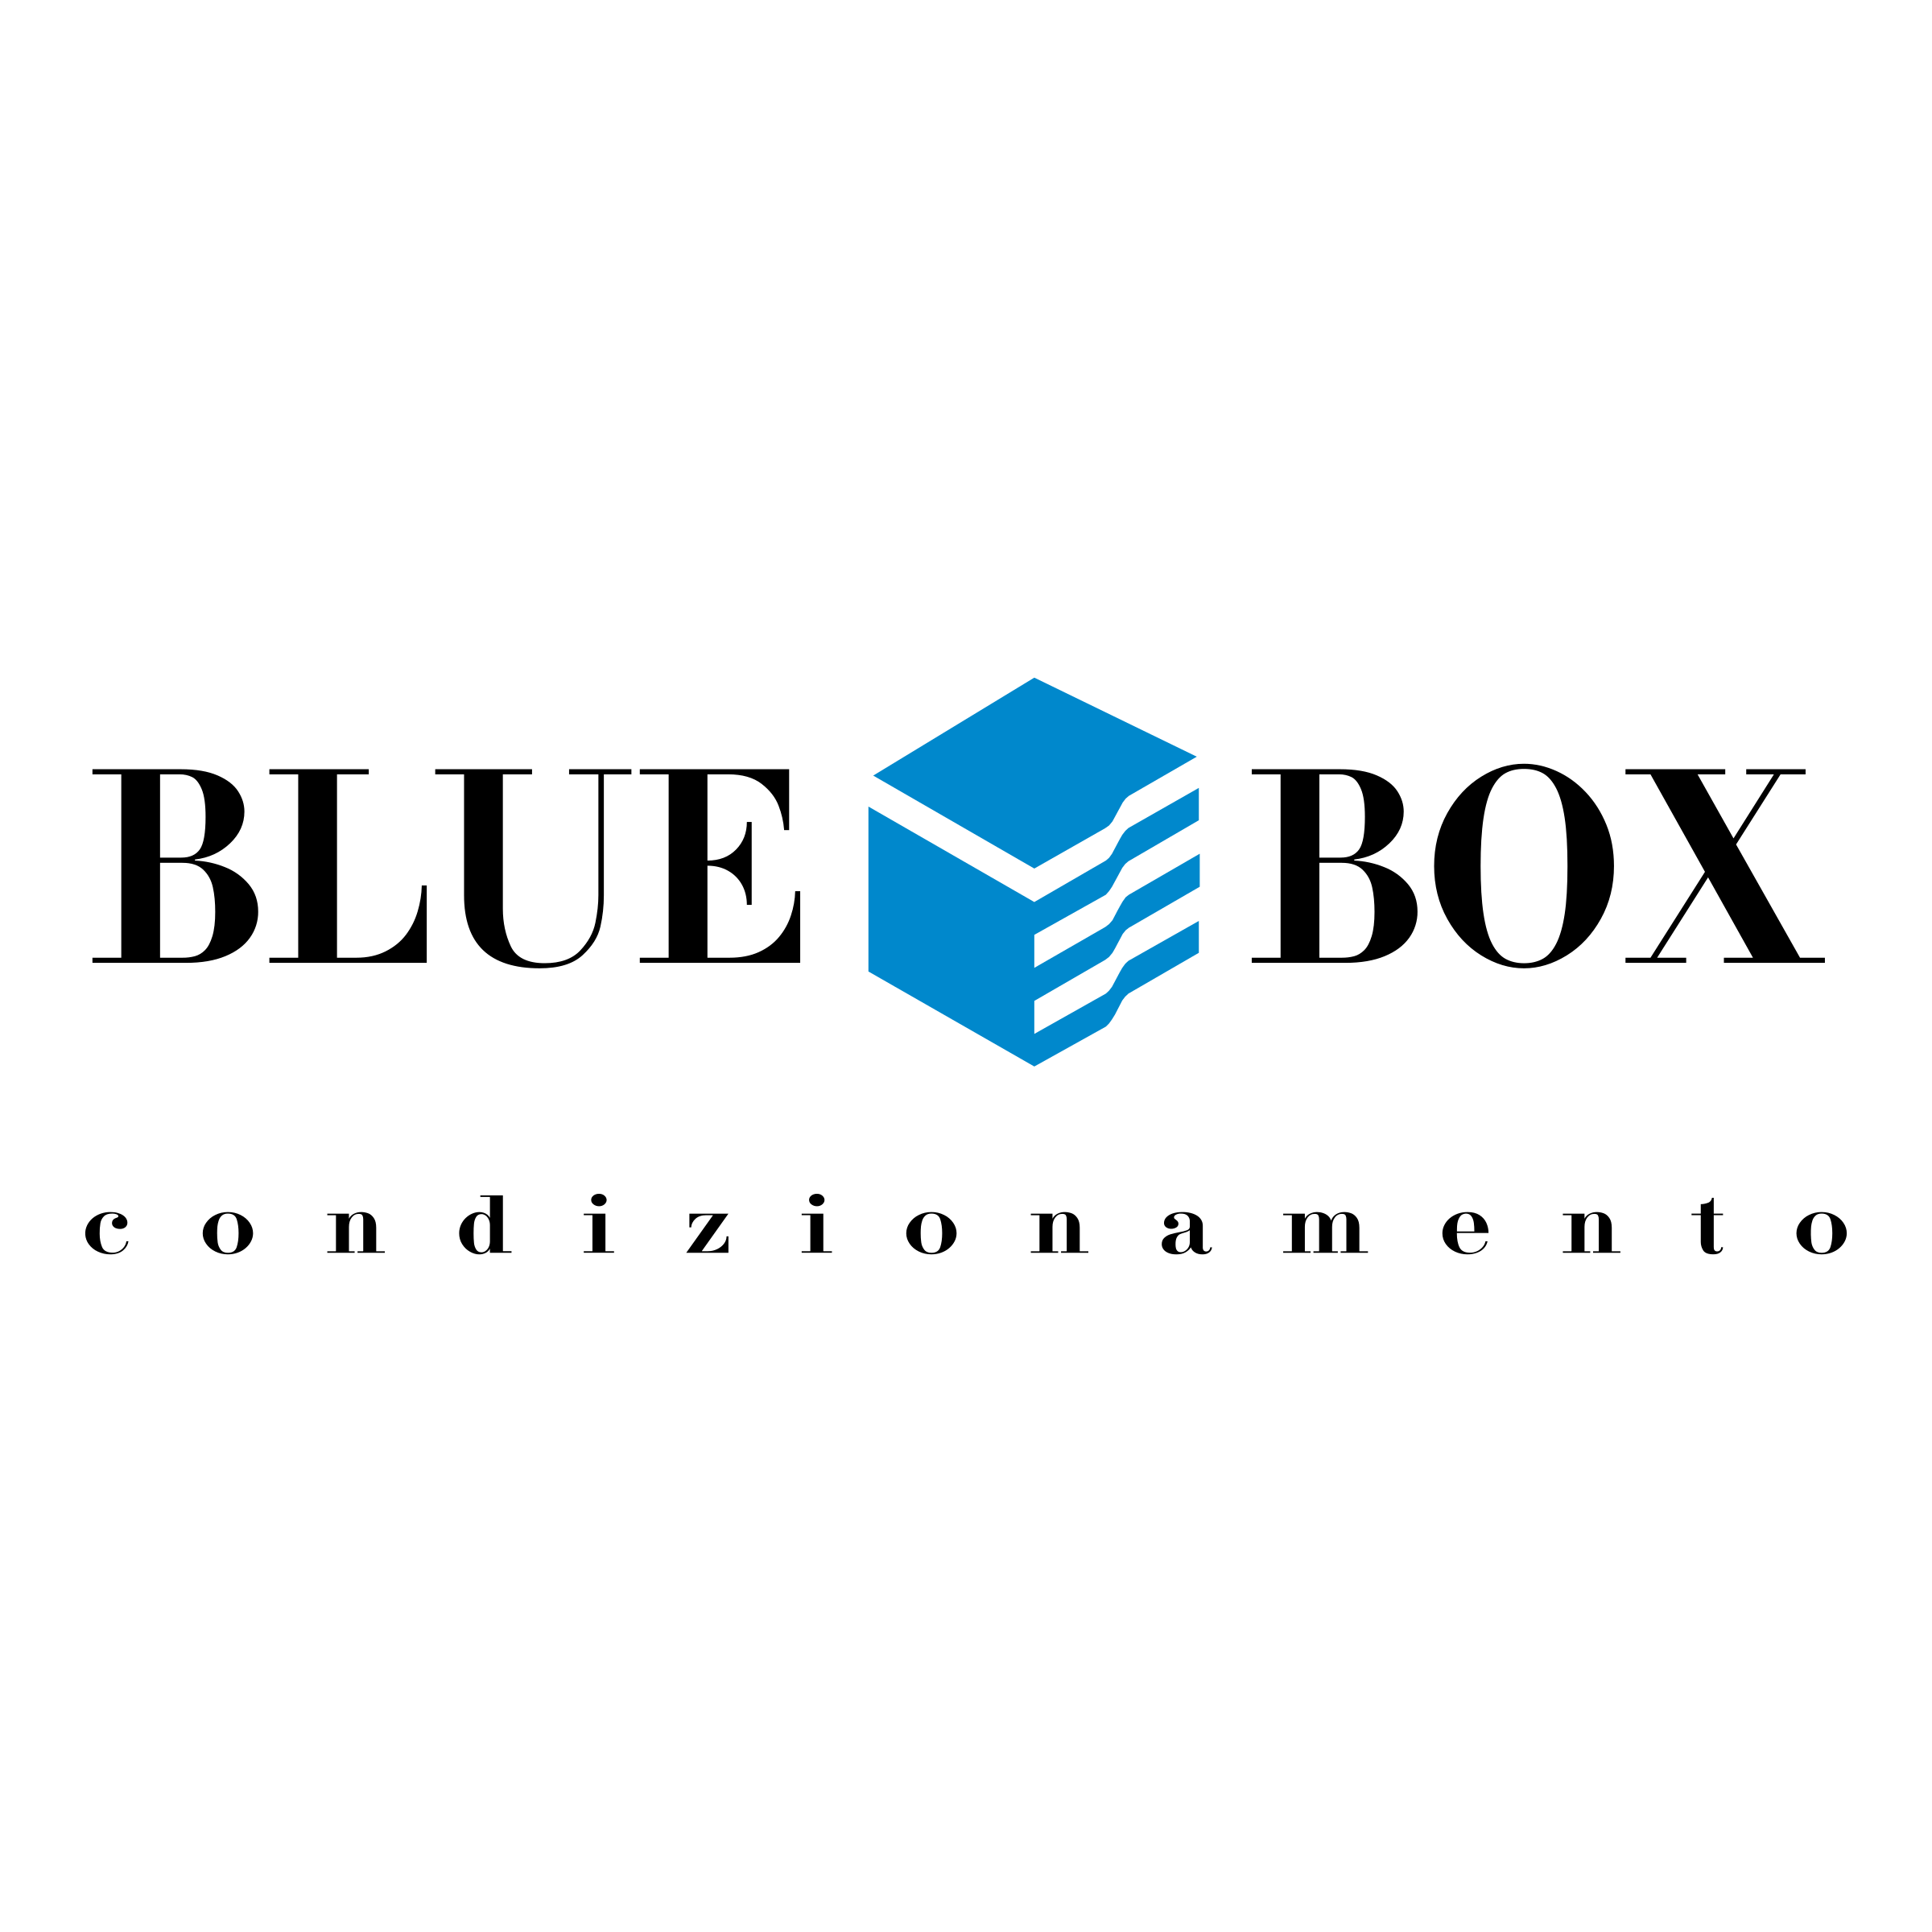 Co Blue Box Logo - Blue Box Logo PNG Transparent & SVG Vector - Freebie Supply